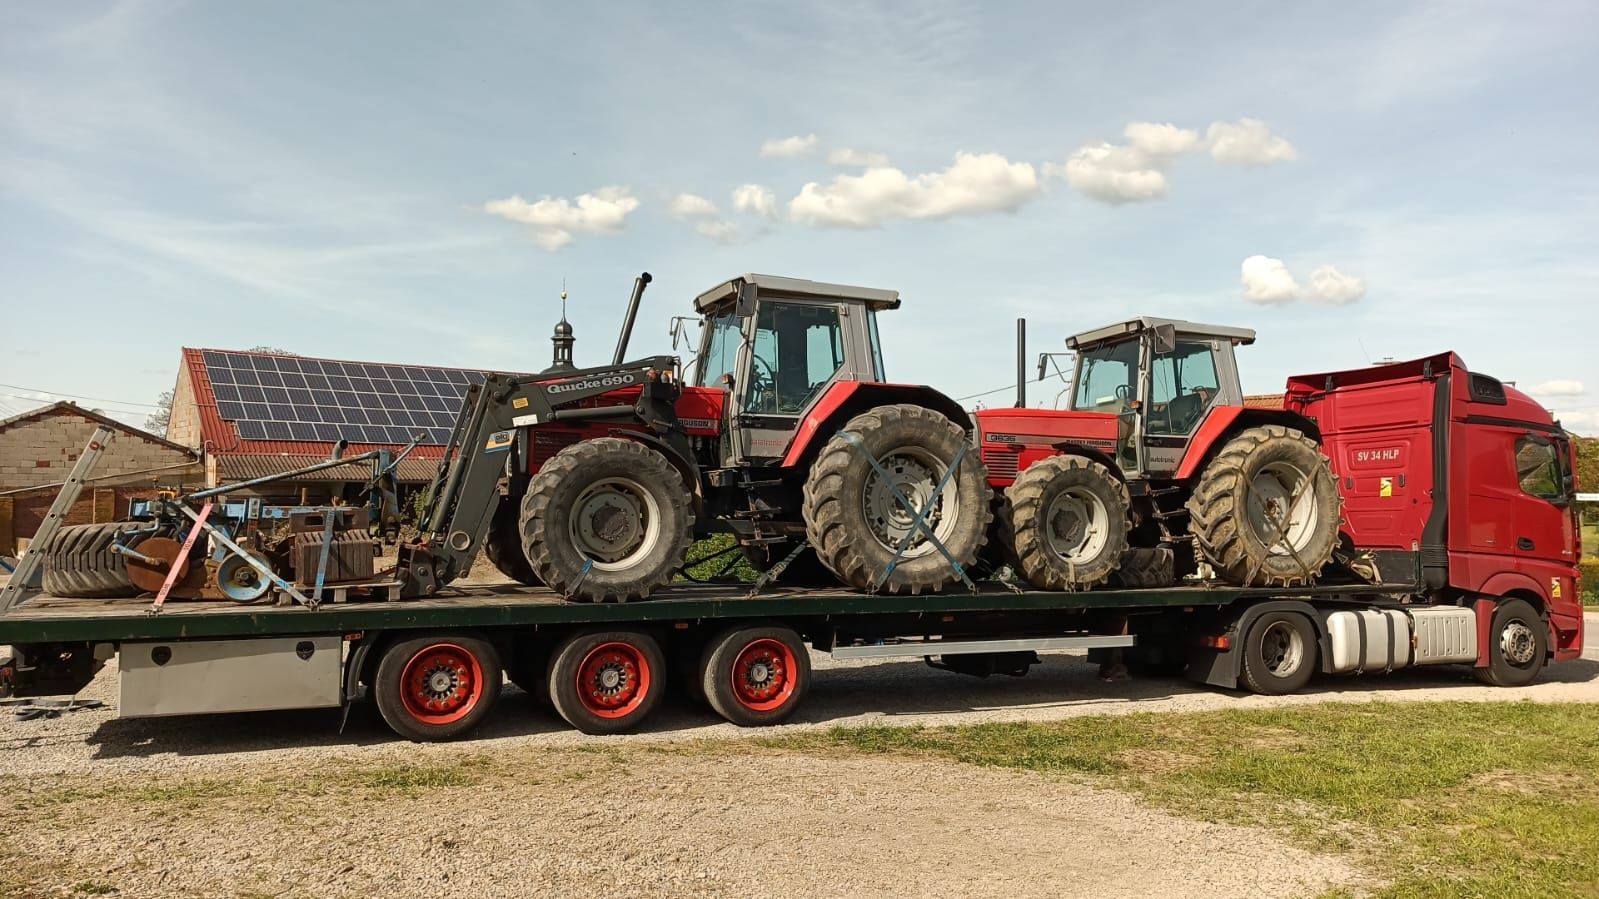 Massey ferguson 3635 tractor